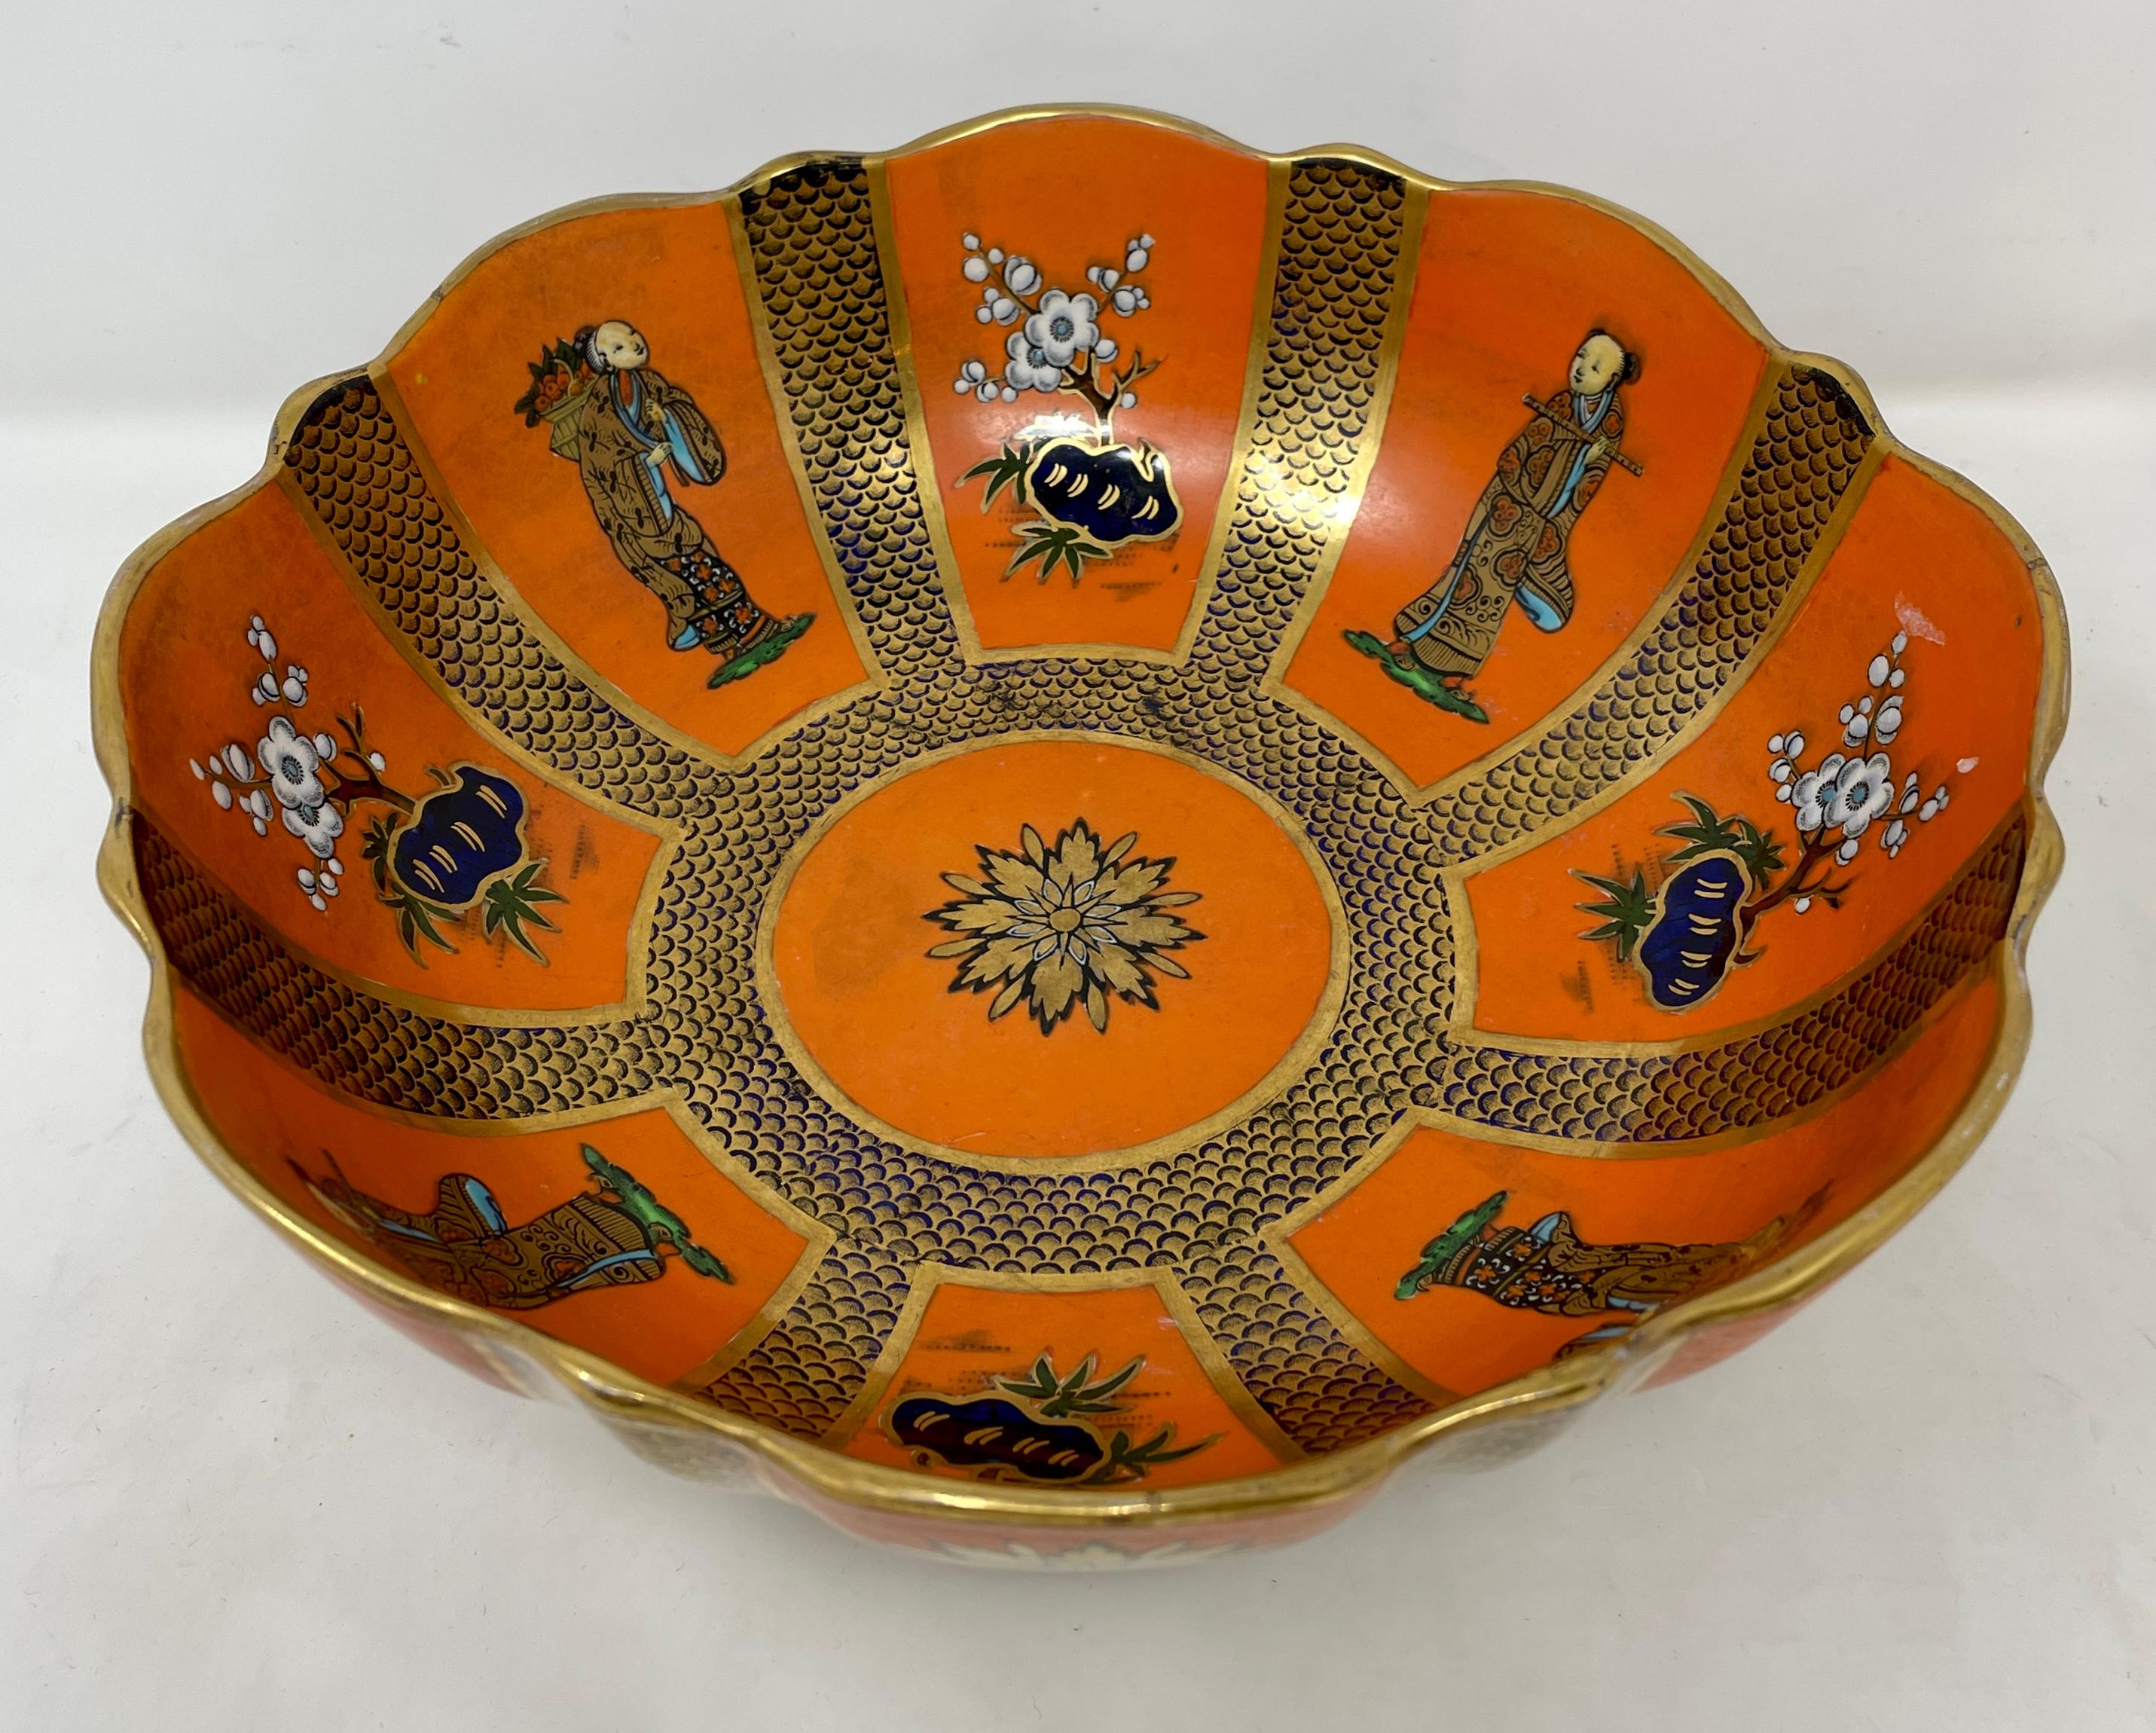 Antique English hand painted persimmon ironstone bowl, circa 1910-1920.